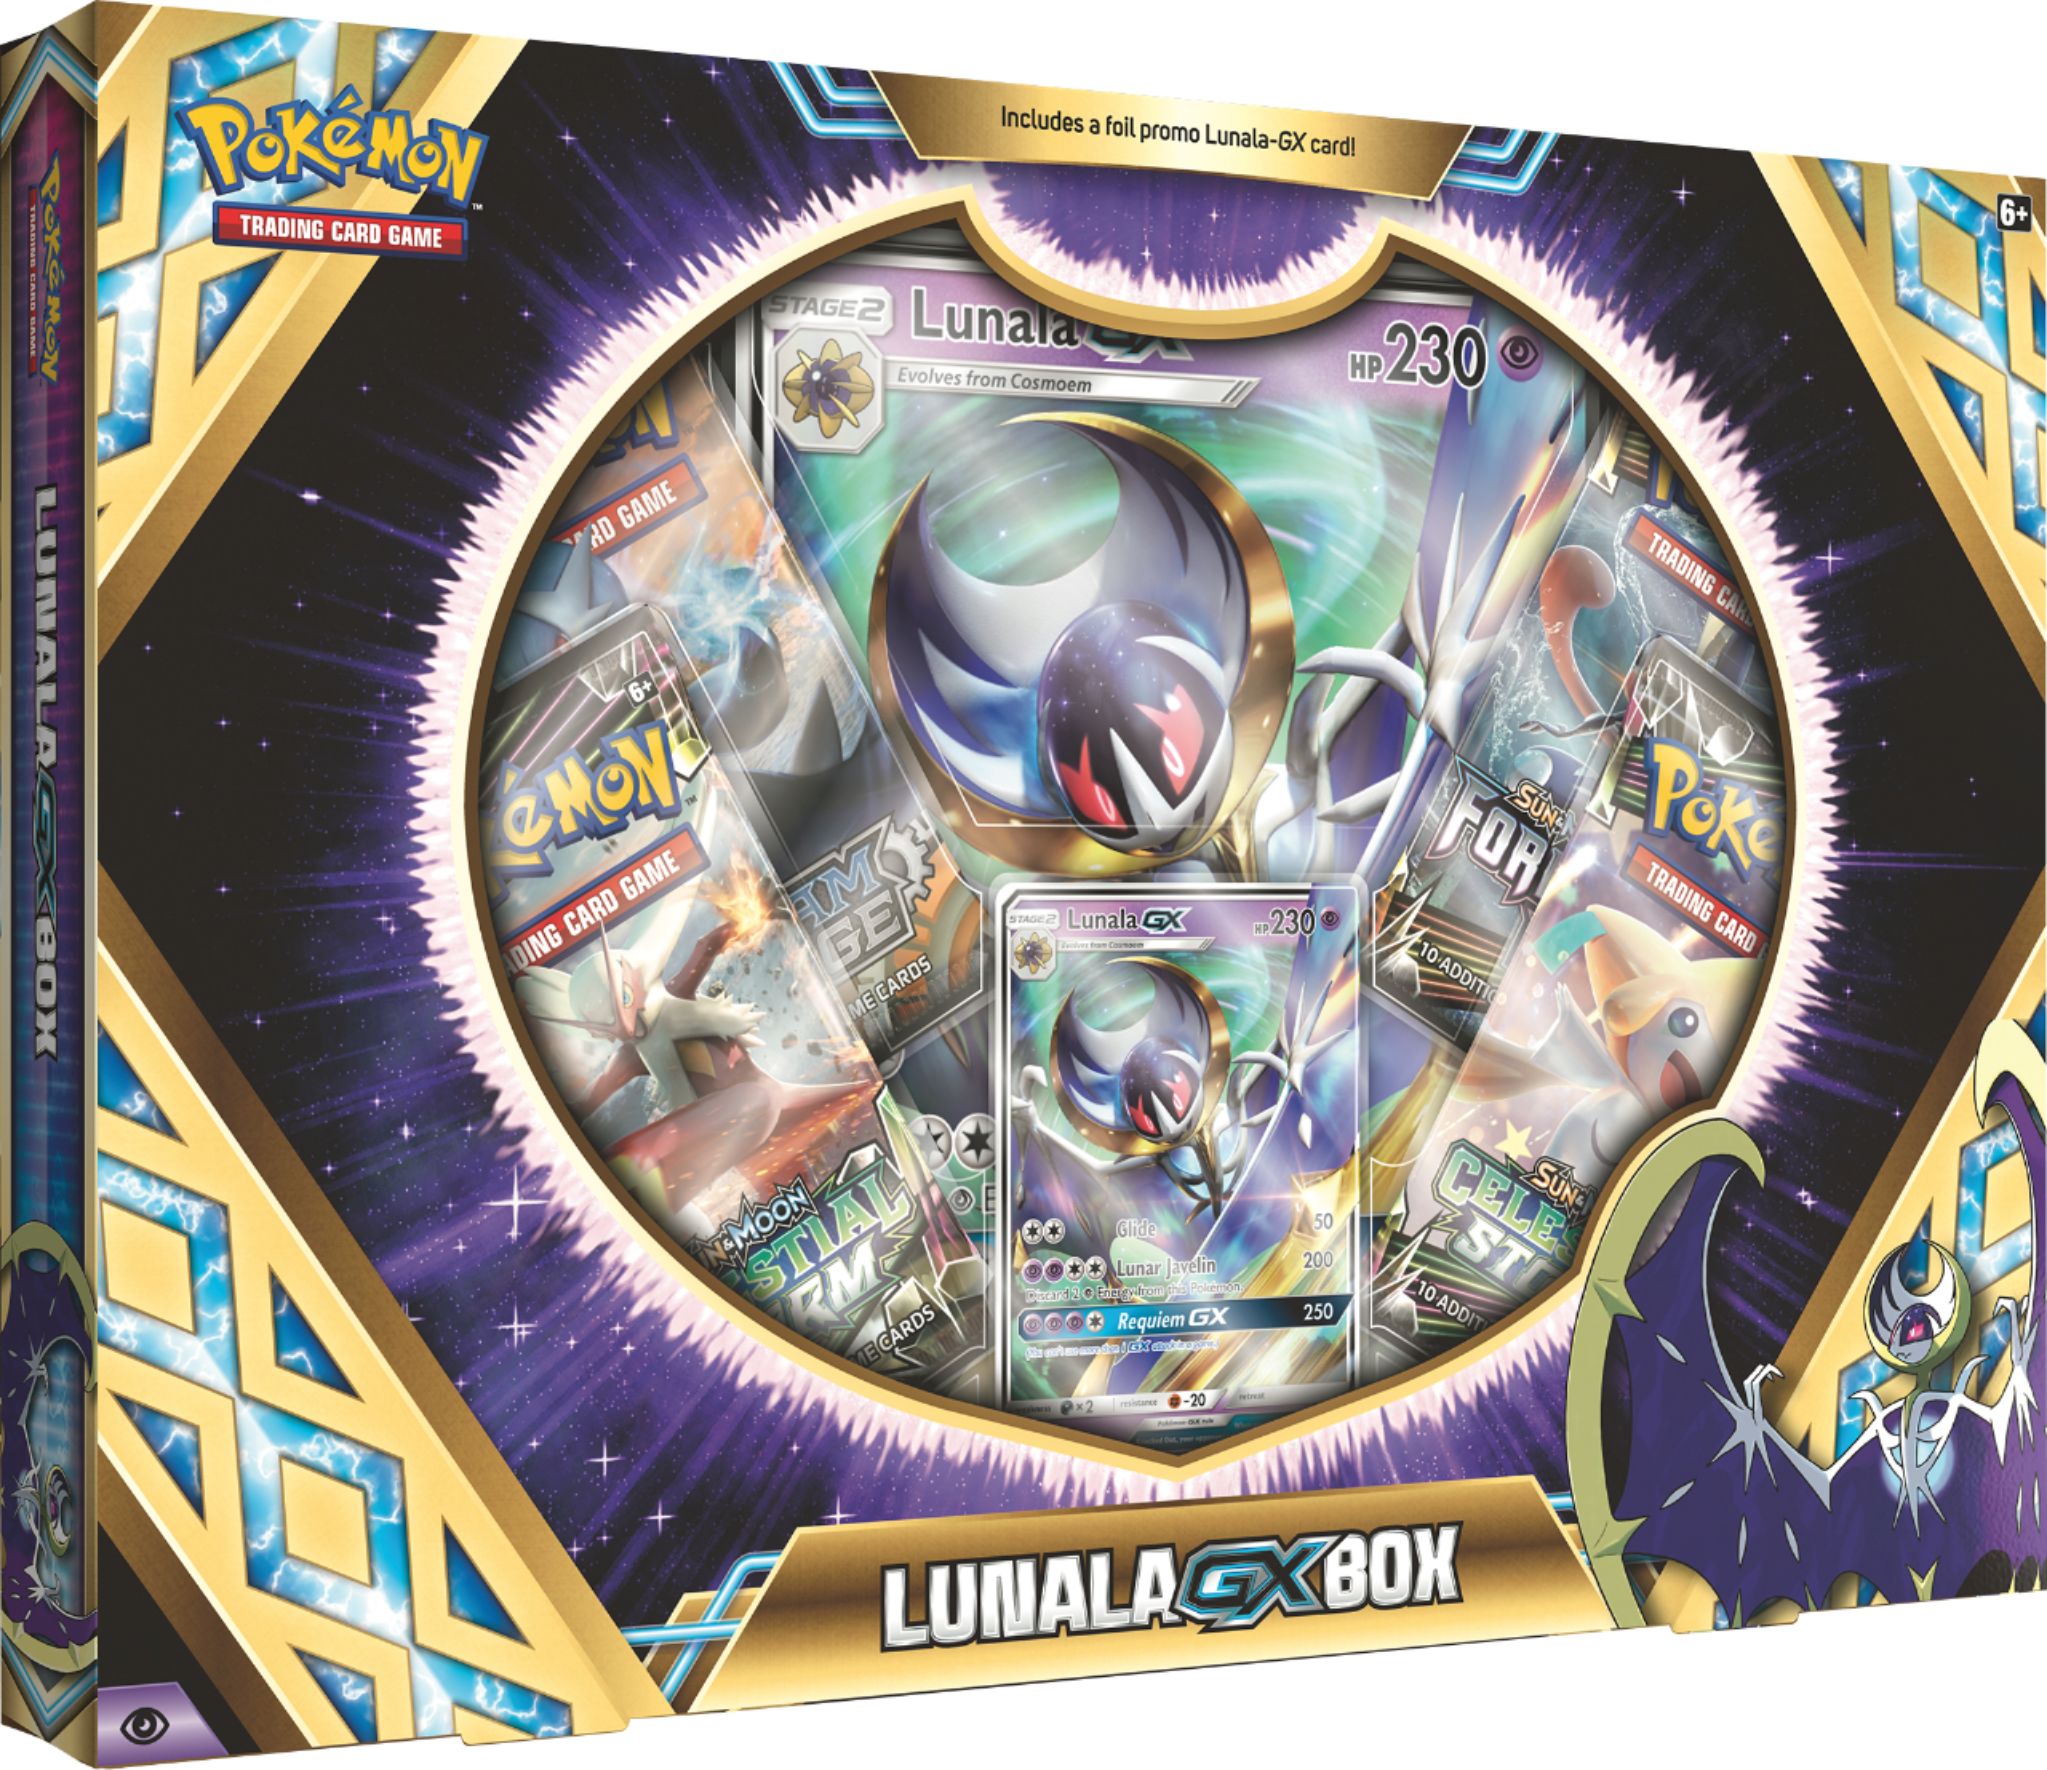 Pokémon Trading Card Game Solgaleo Gx Lunala Gx Box Styles May Vary